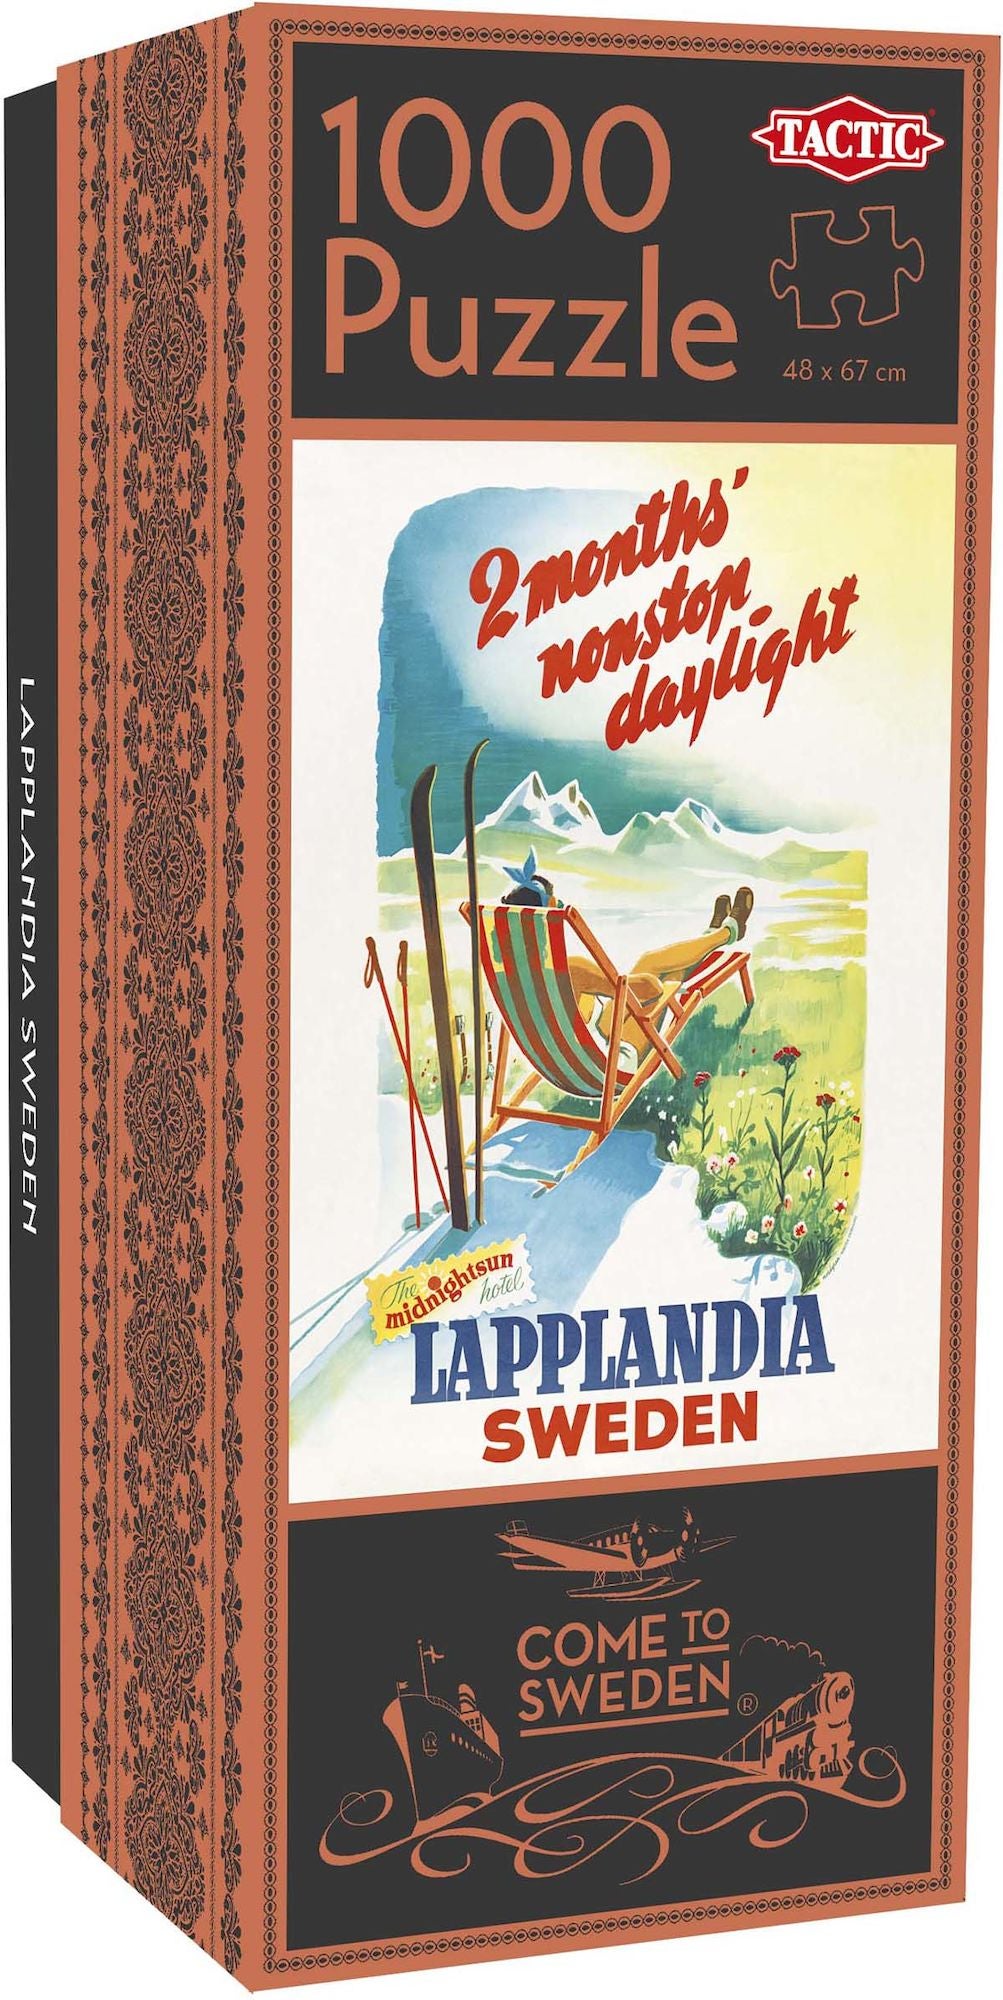 Tactic Puzzle Come to Sweden: Lapplandia, Sweden 1000 Teile von Tactic